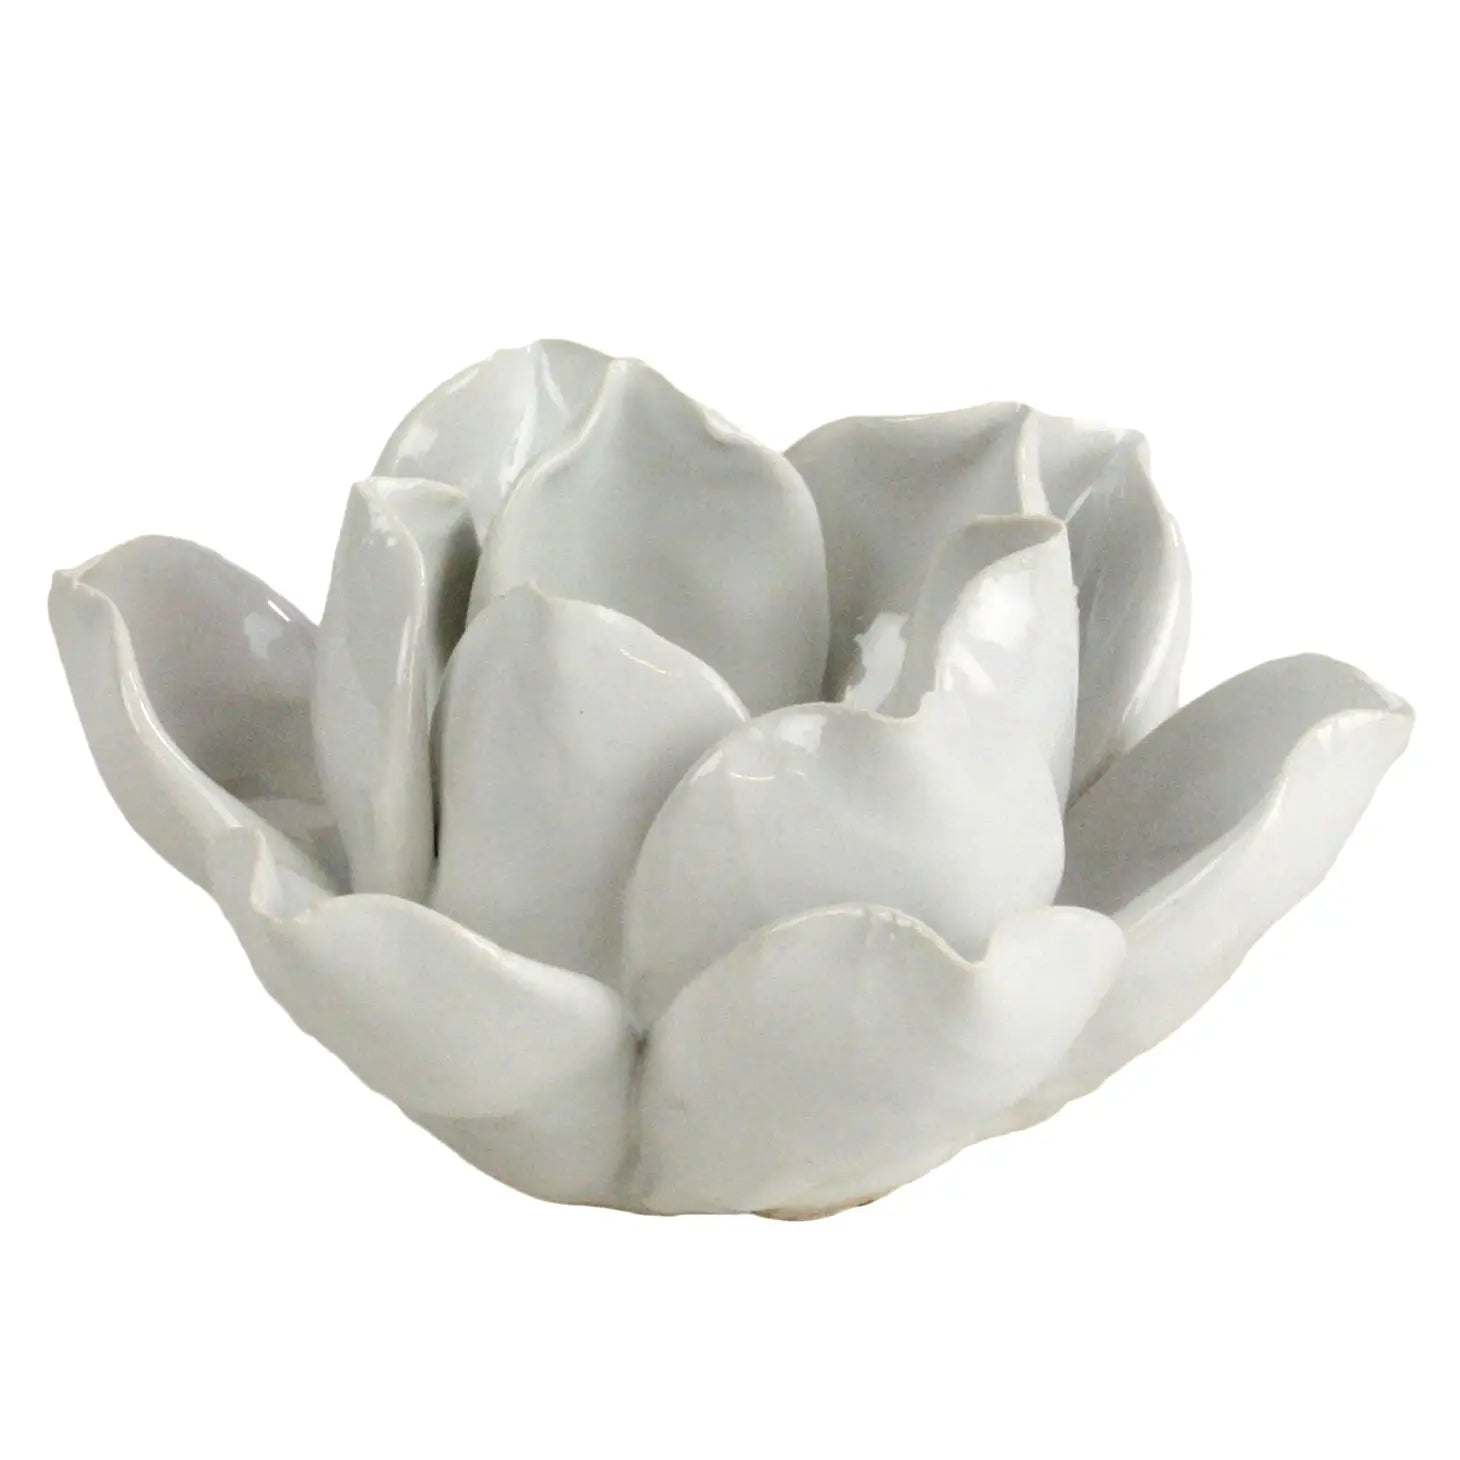 Lotus Tea Light Holder - White - Mindful Living Home